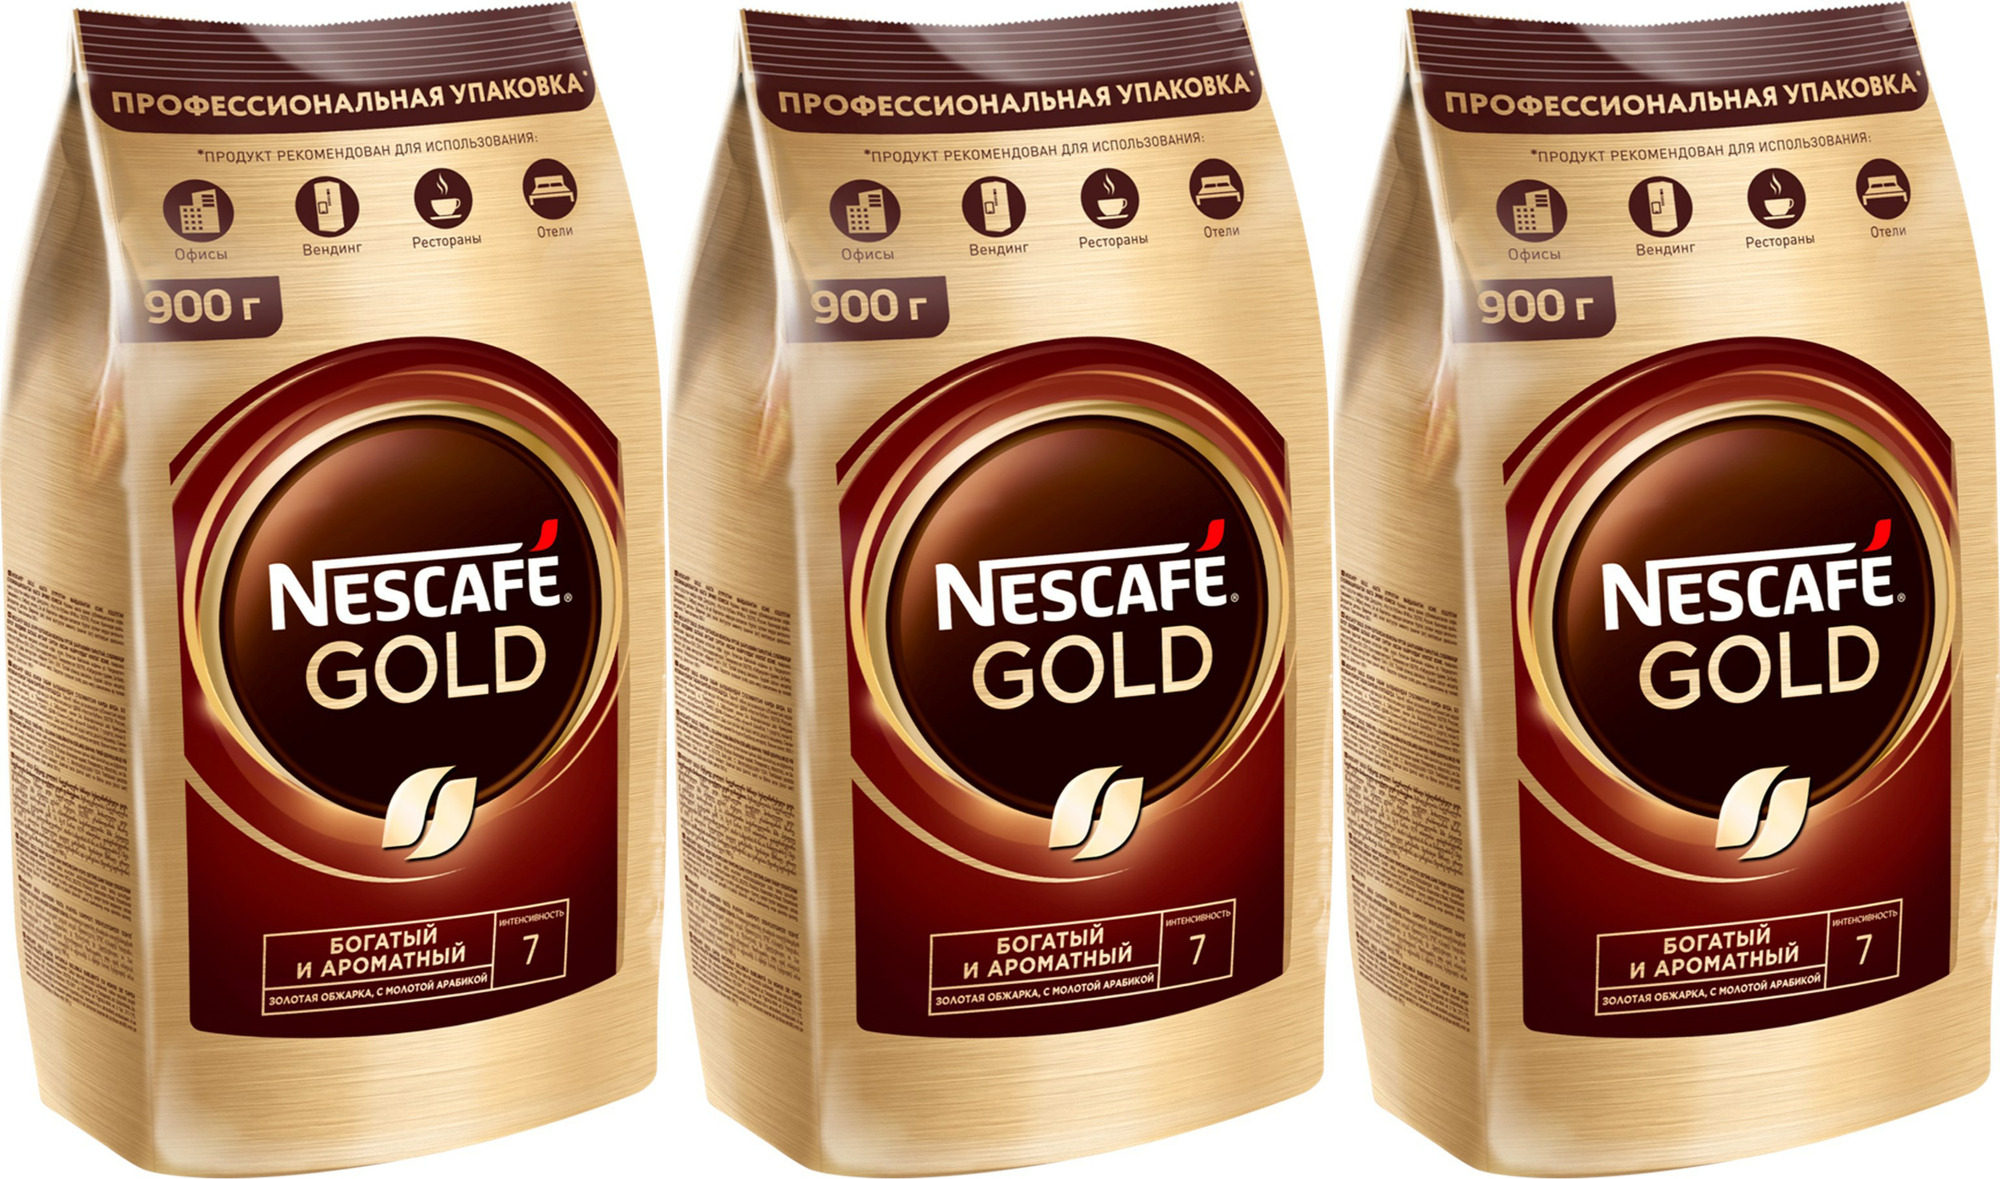 Кофе nescafe gold 900 г. Нескафе Голд 900. Нескафе Голд 900 гр. Кофе растворимый Нескафе Голд. Кофе Нескафе Голд 900г.